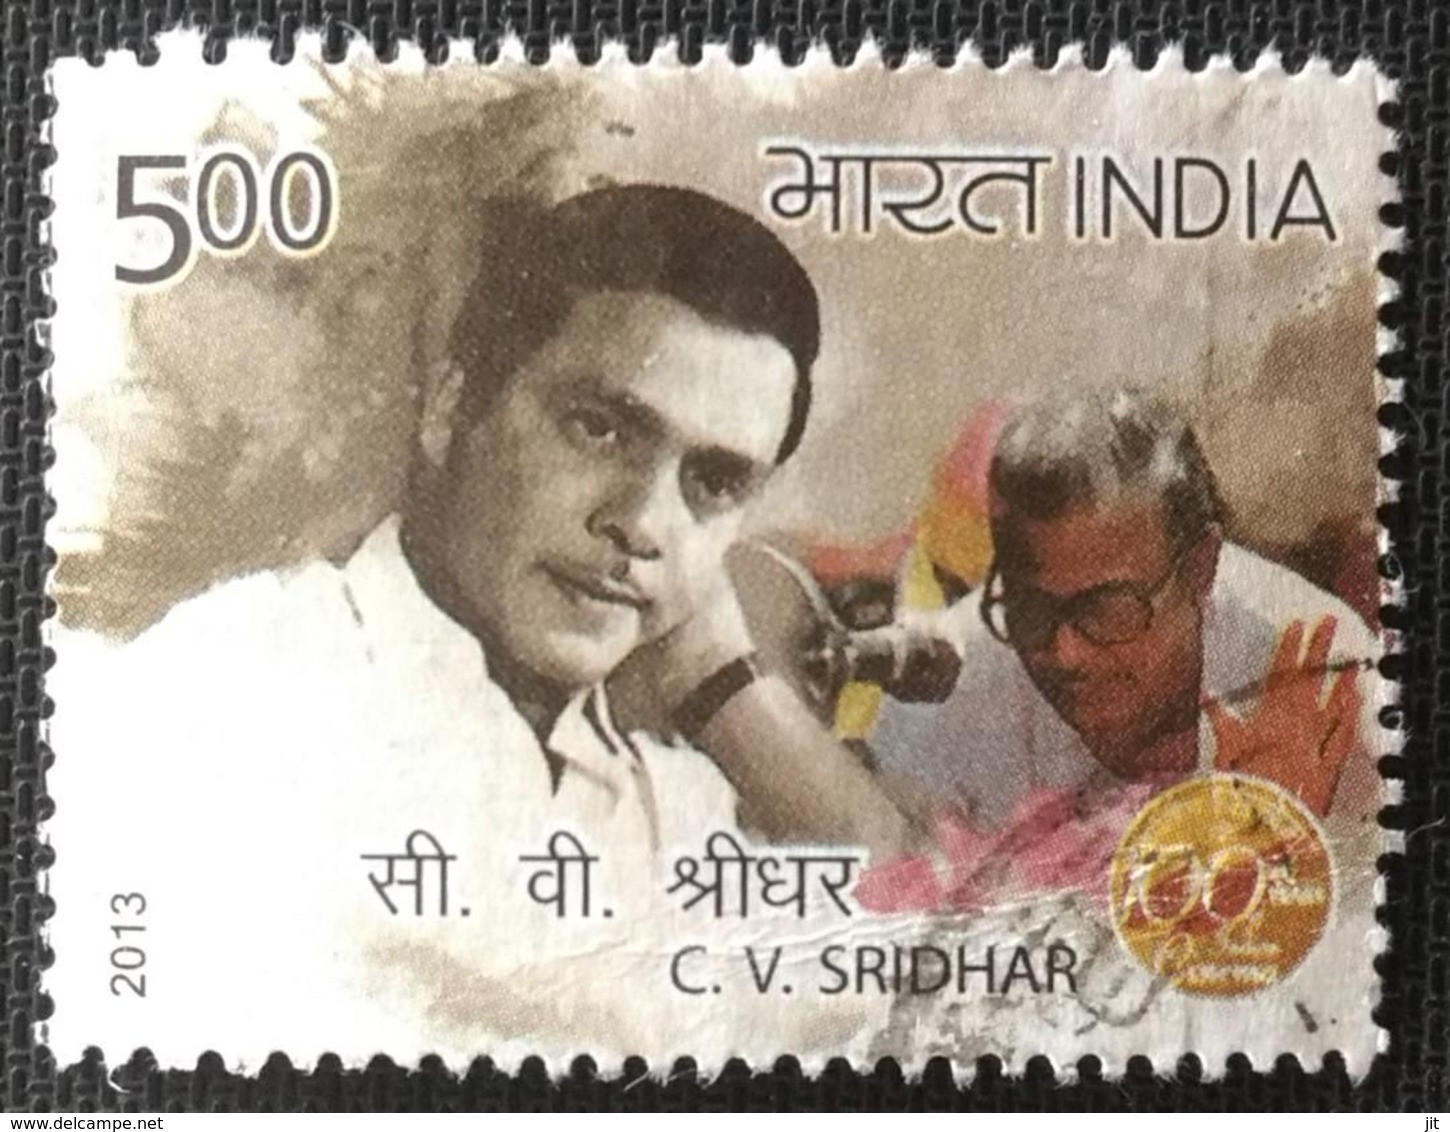 INDIA 2013 USED STAMP 100 YEARS OF INDIAN CINEMA (C.V.SRIDHAR) - Usati